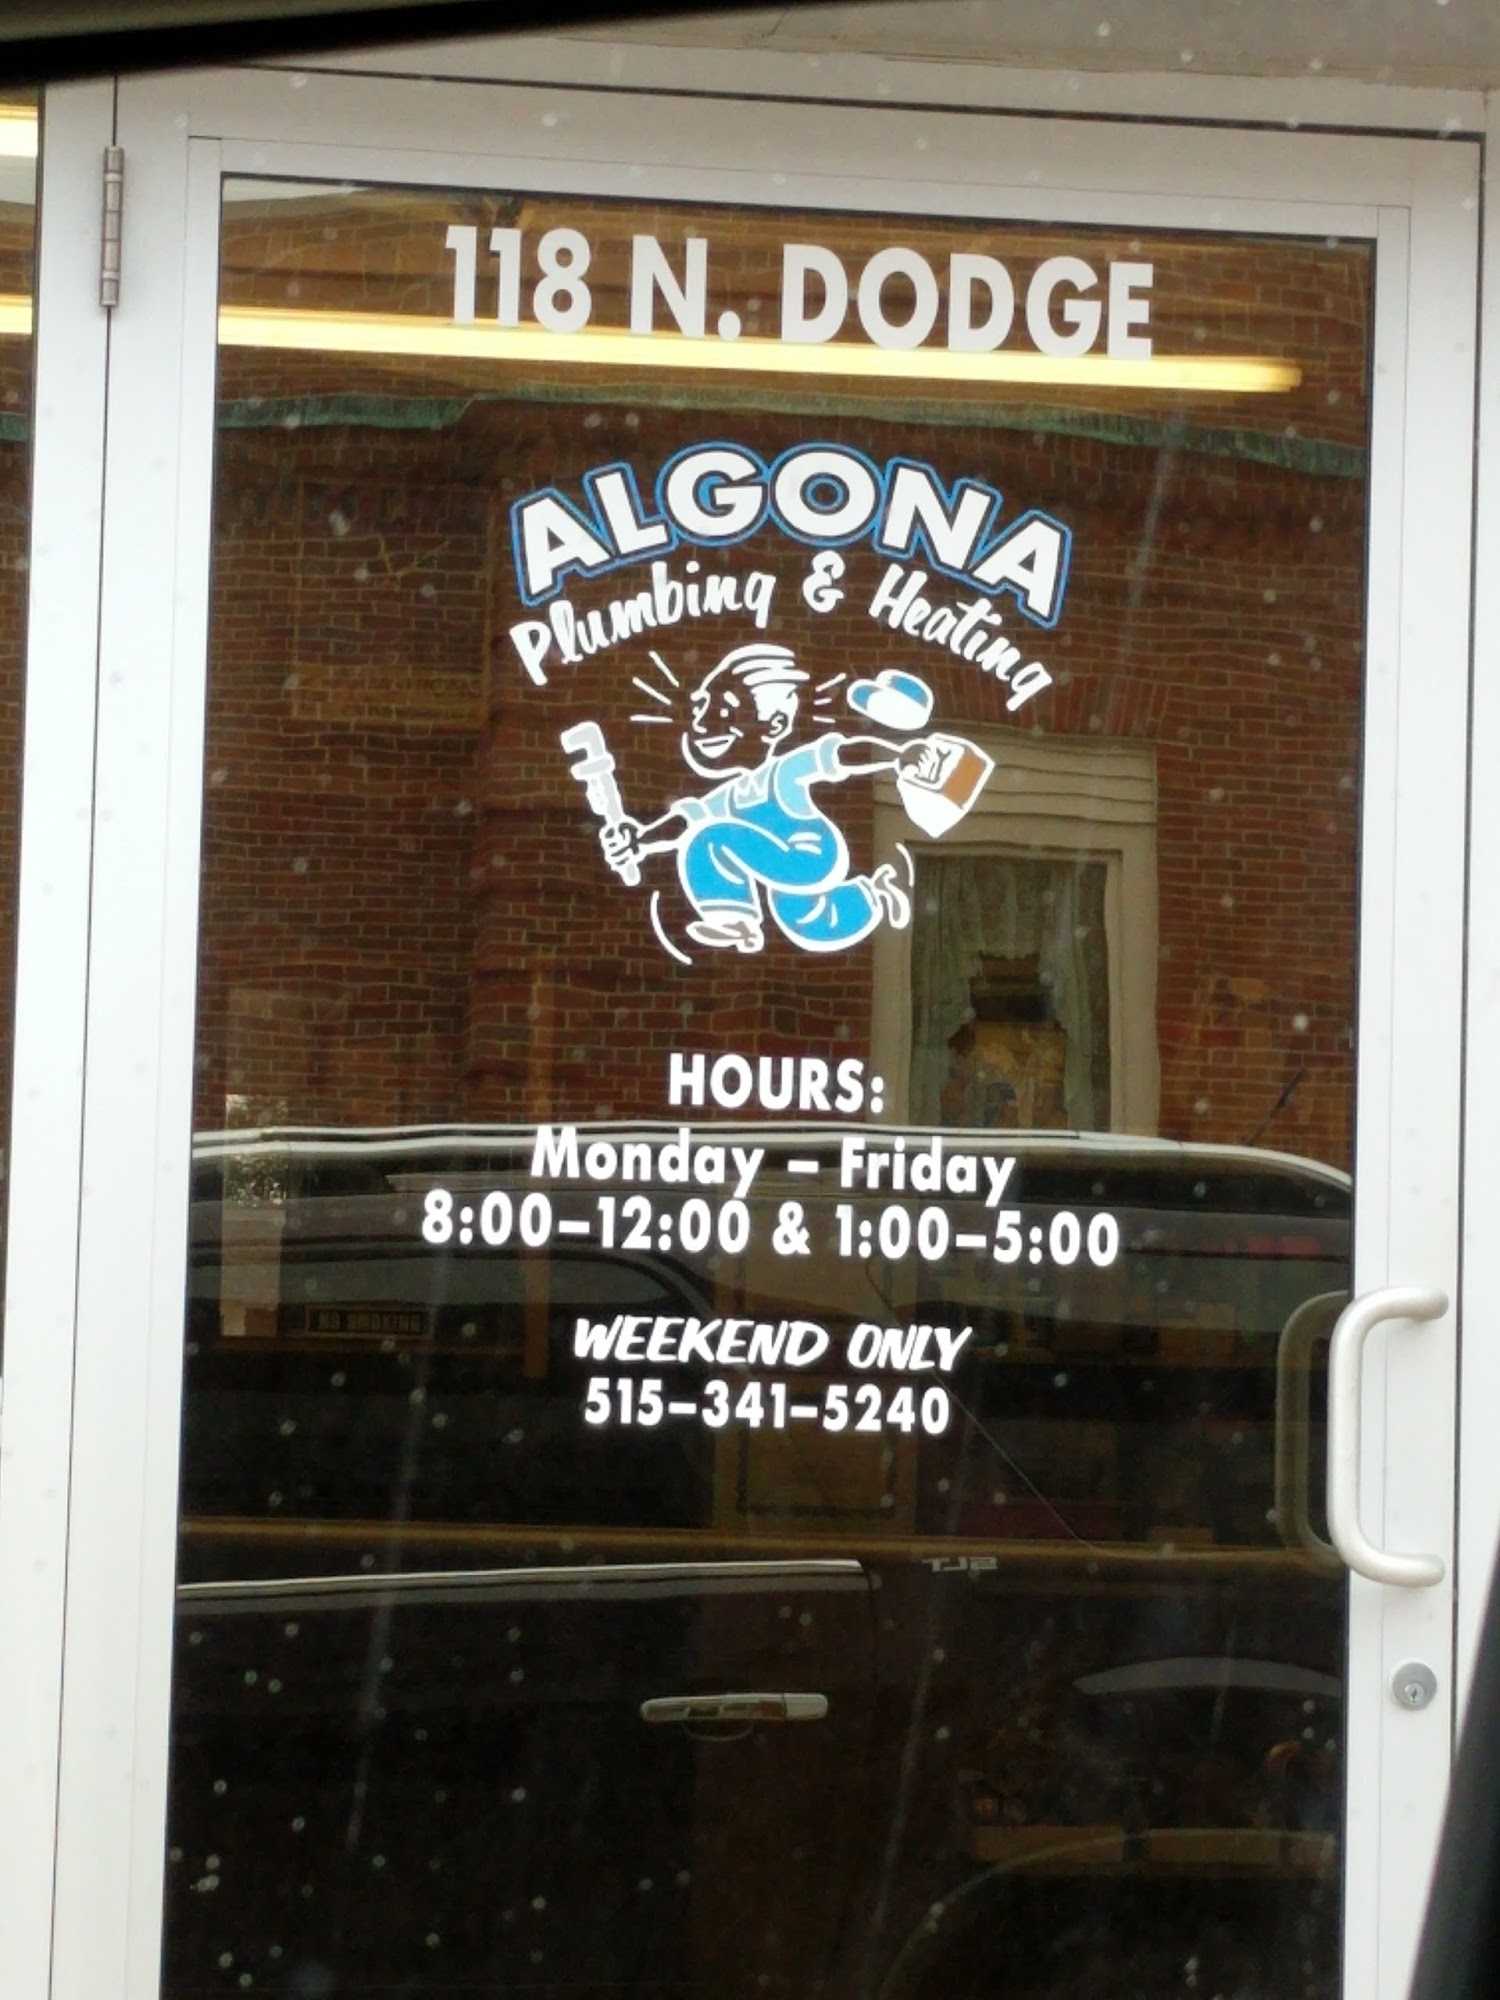 Algona Plumbing & Heating 118 N Dodge St, Algona Iowa 50511